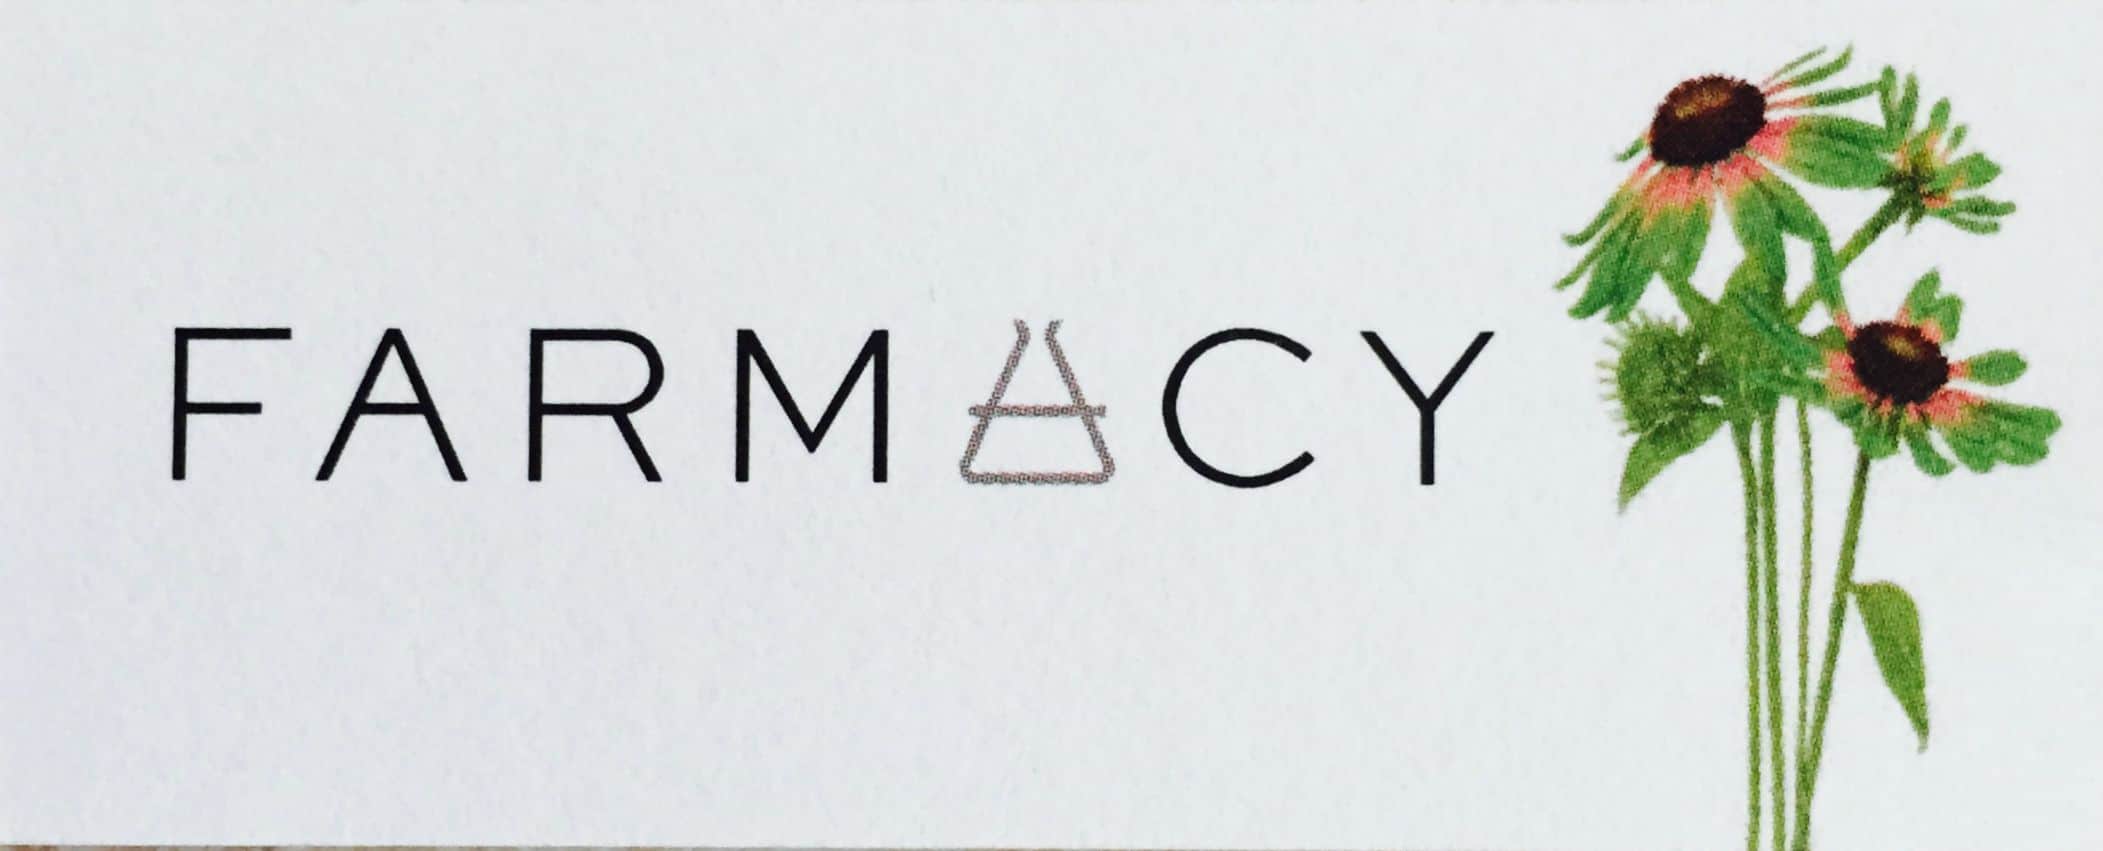 farmacy logo flower